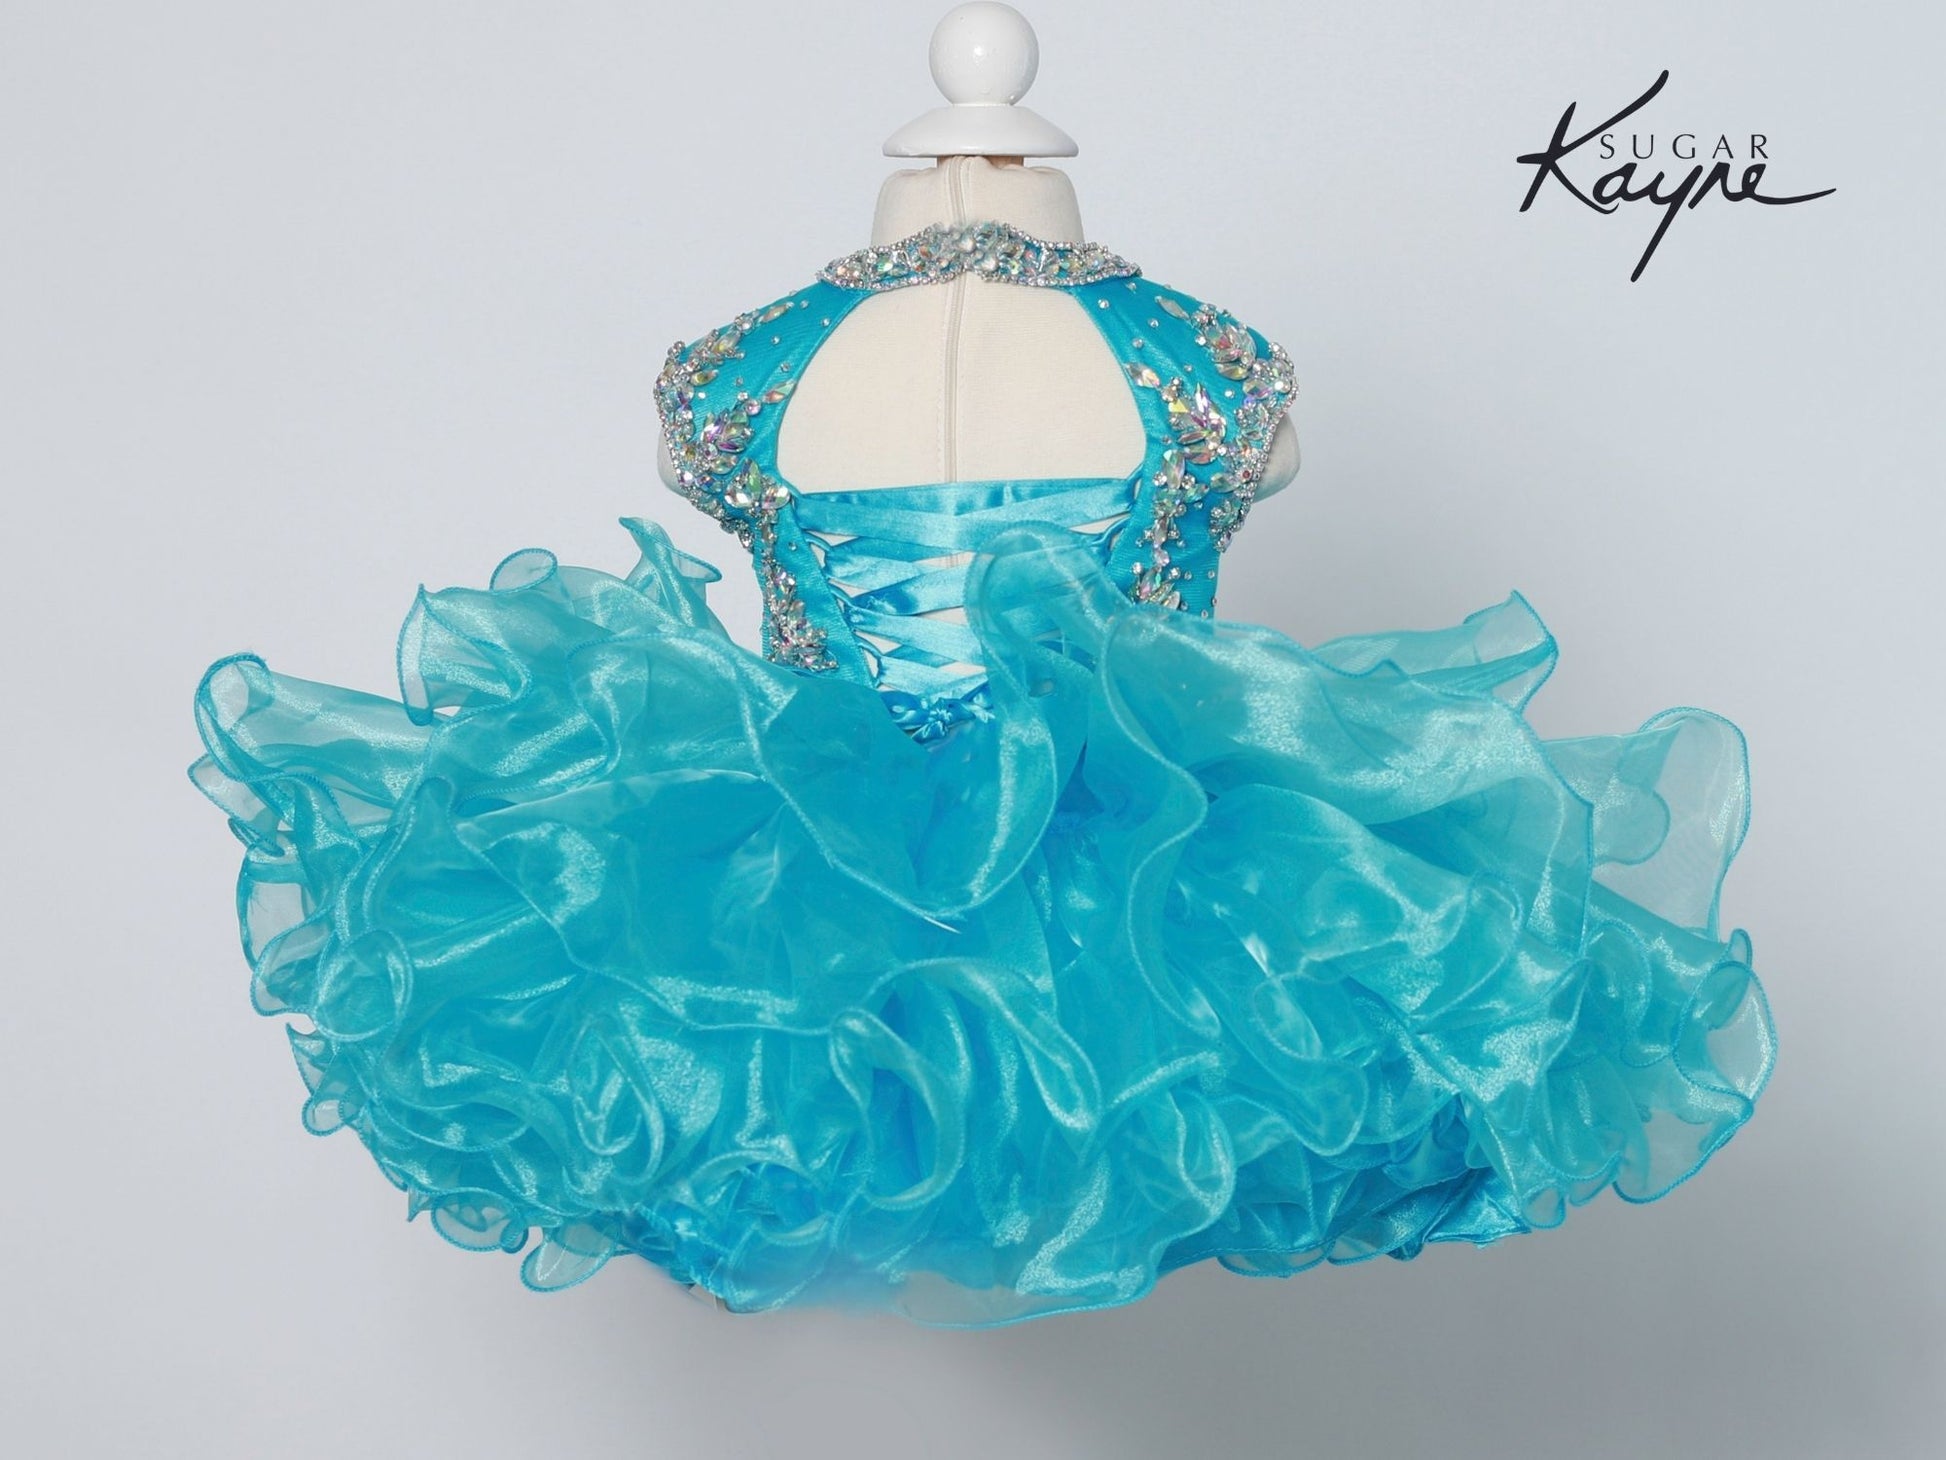 Sugar Kayne C207 Short Cupcake High Neckline Pageant Dress Girls Corset Ruffle Skirt  Sizes: 0M, 6M, 12M, 18M, 24M, 2T, 3T, 4T, 5T, 6T  Colors: Grape, Hot Coral, Electric Blue